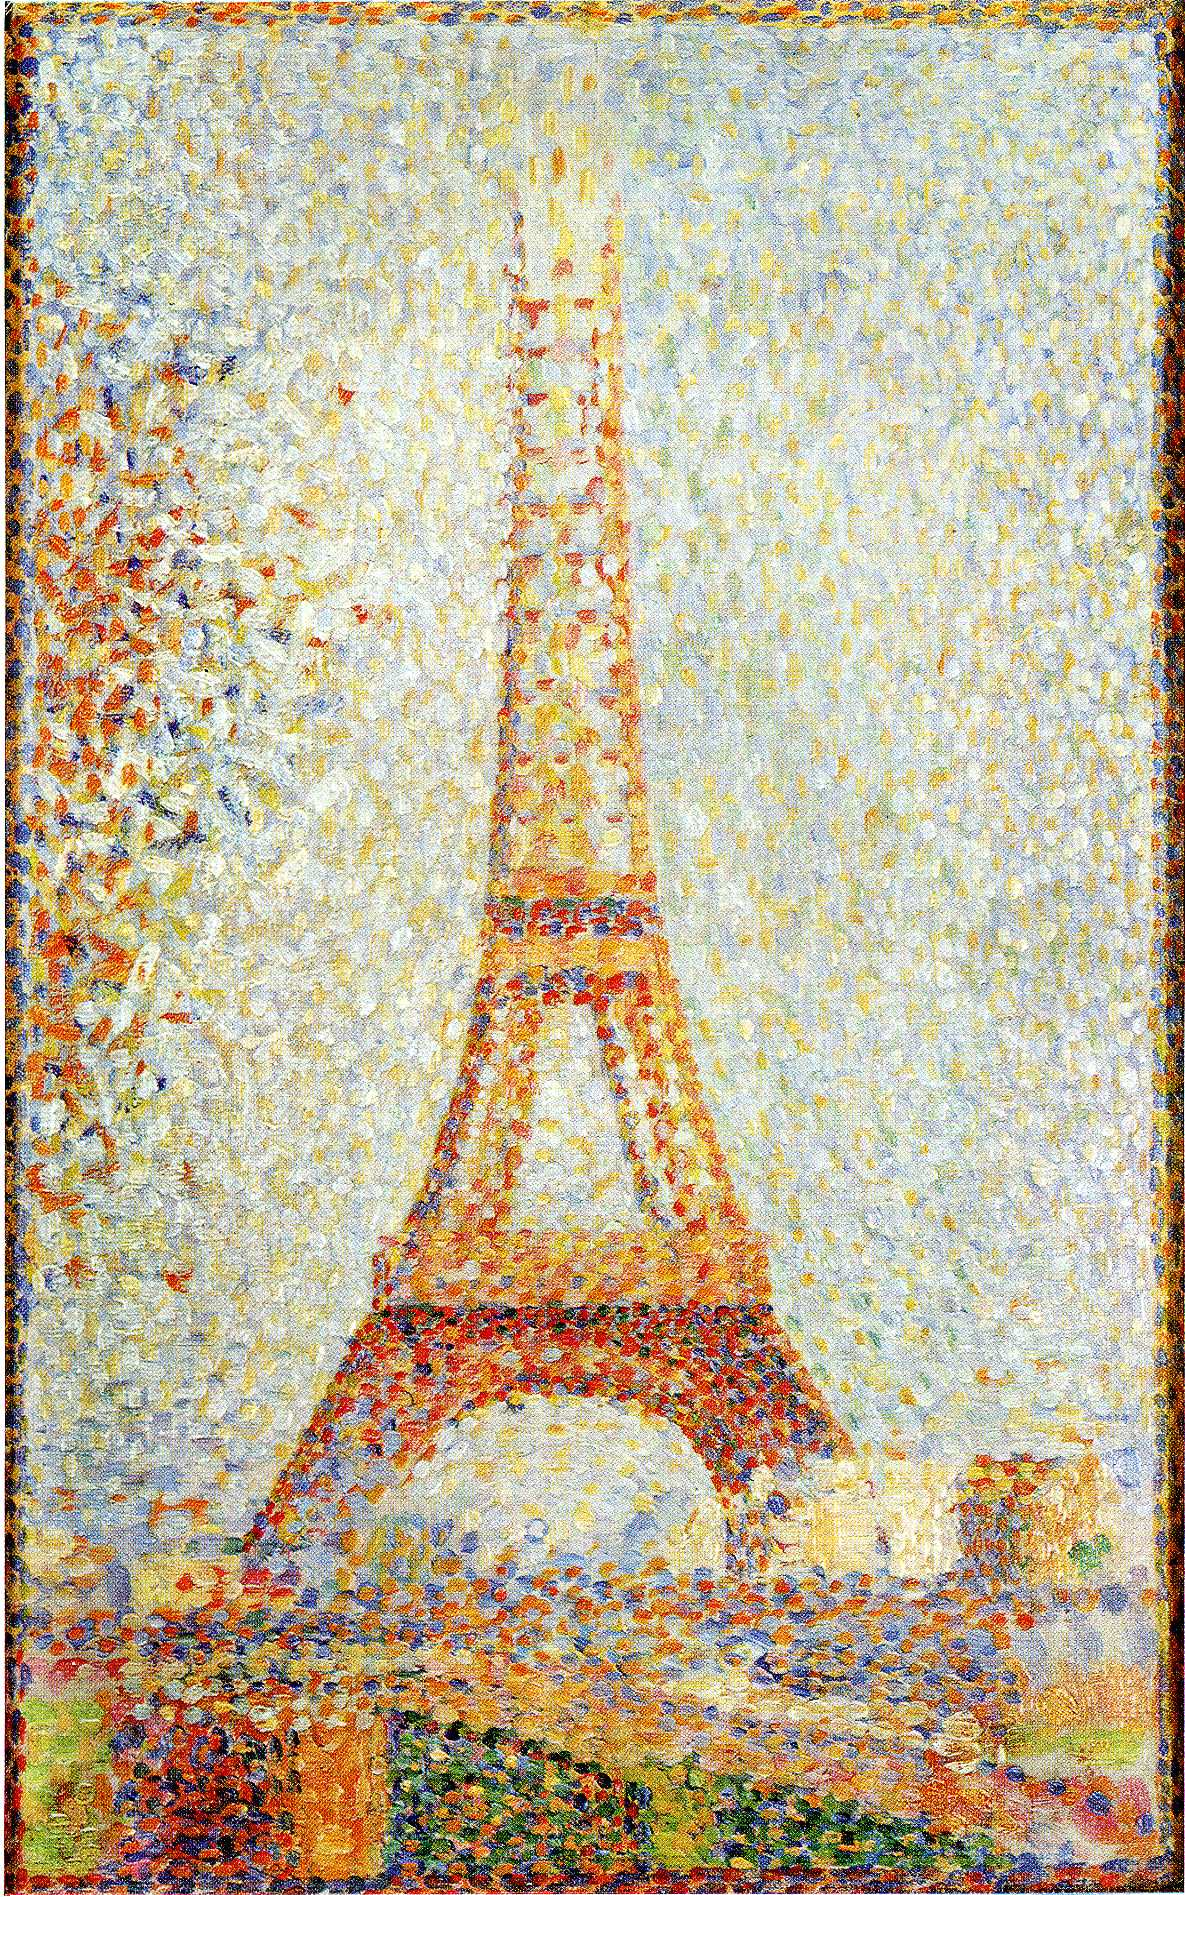 La Torre Eiffel by Georges Seurat - 1889 El de Young